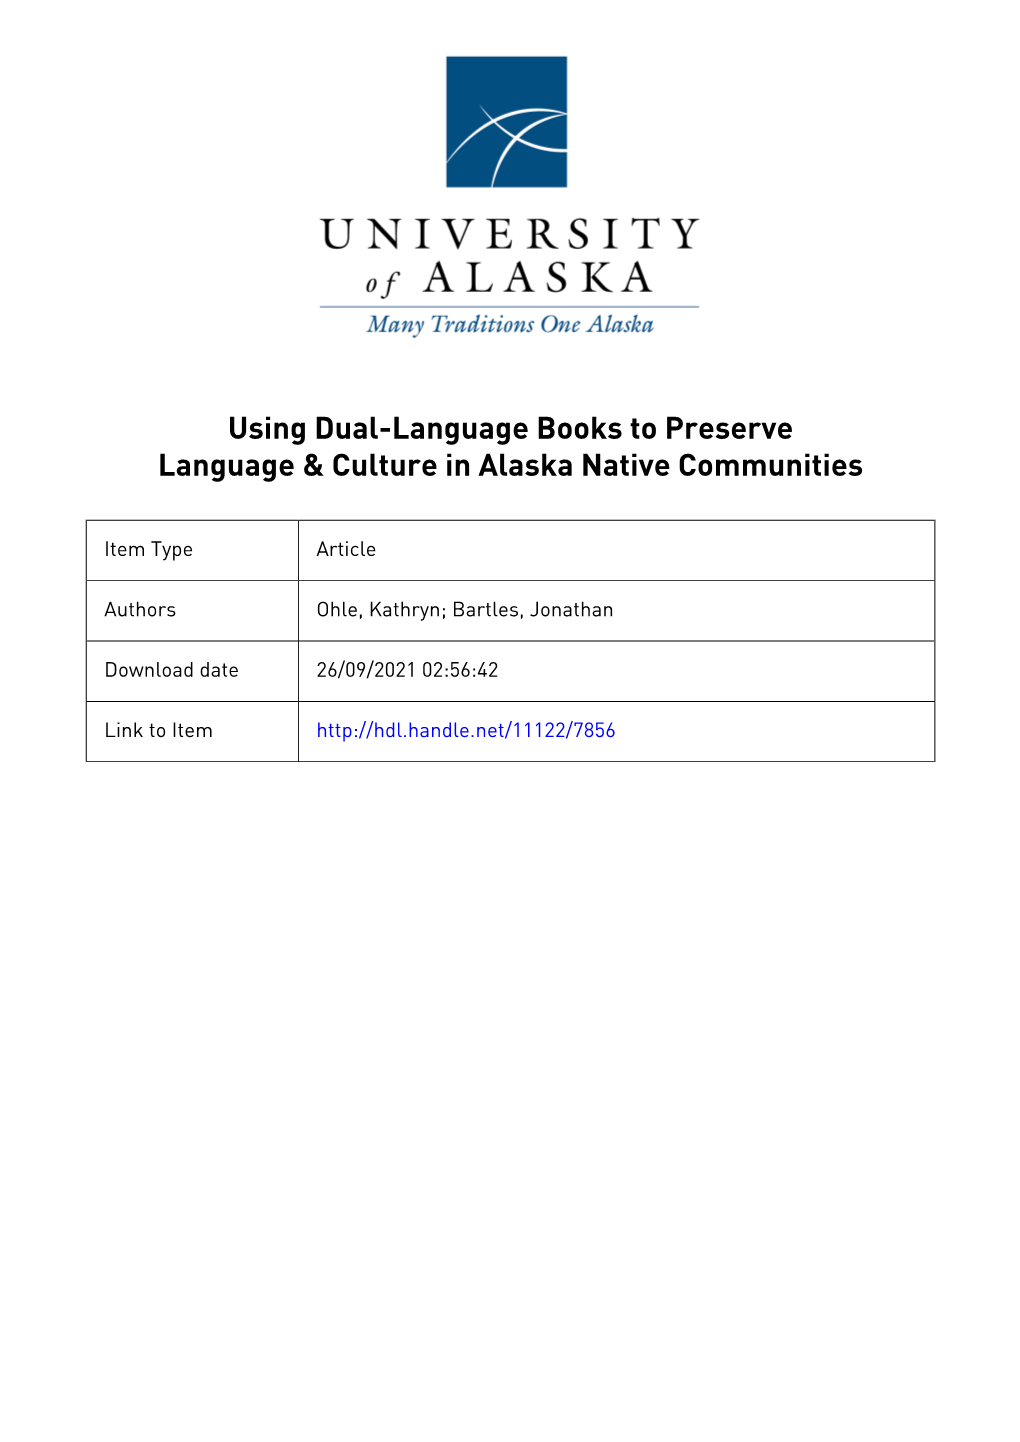 Using Dual-Language Books to Preserve Language & Culture In